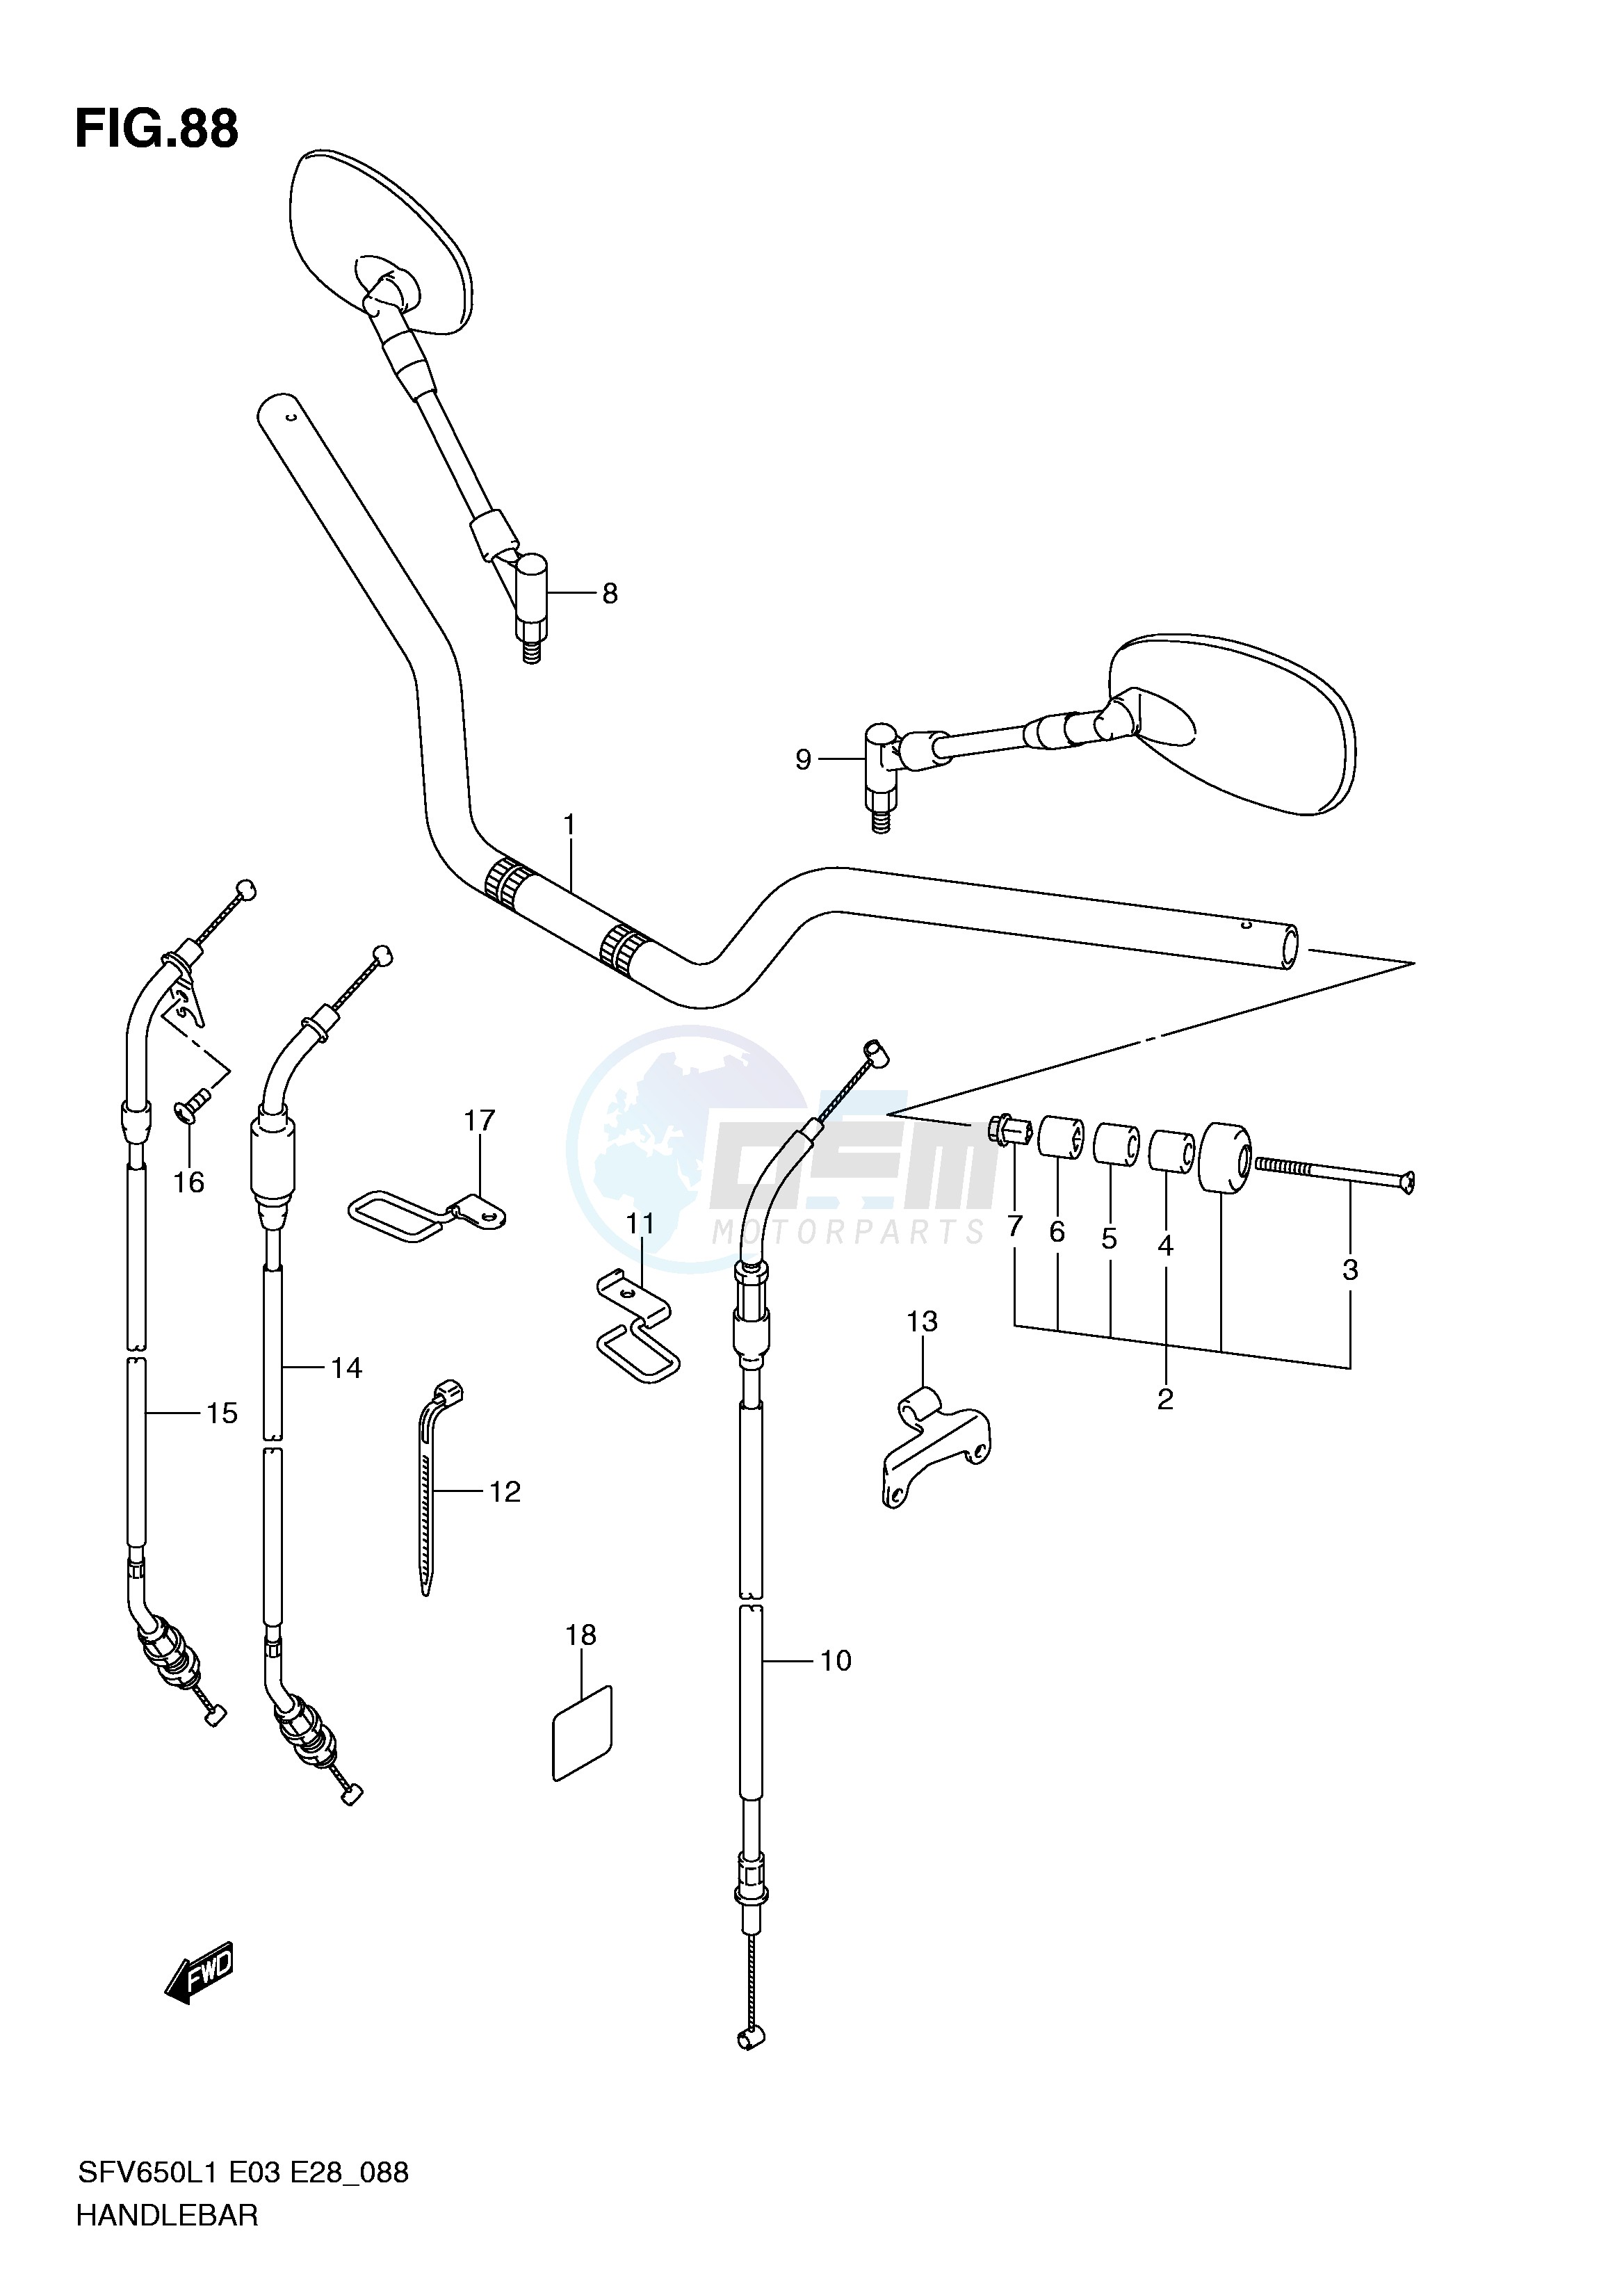 HANDLEBAR (SFV650L1 E33) blueprint